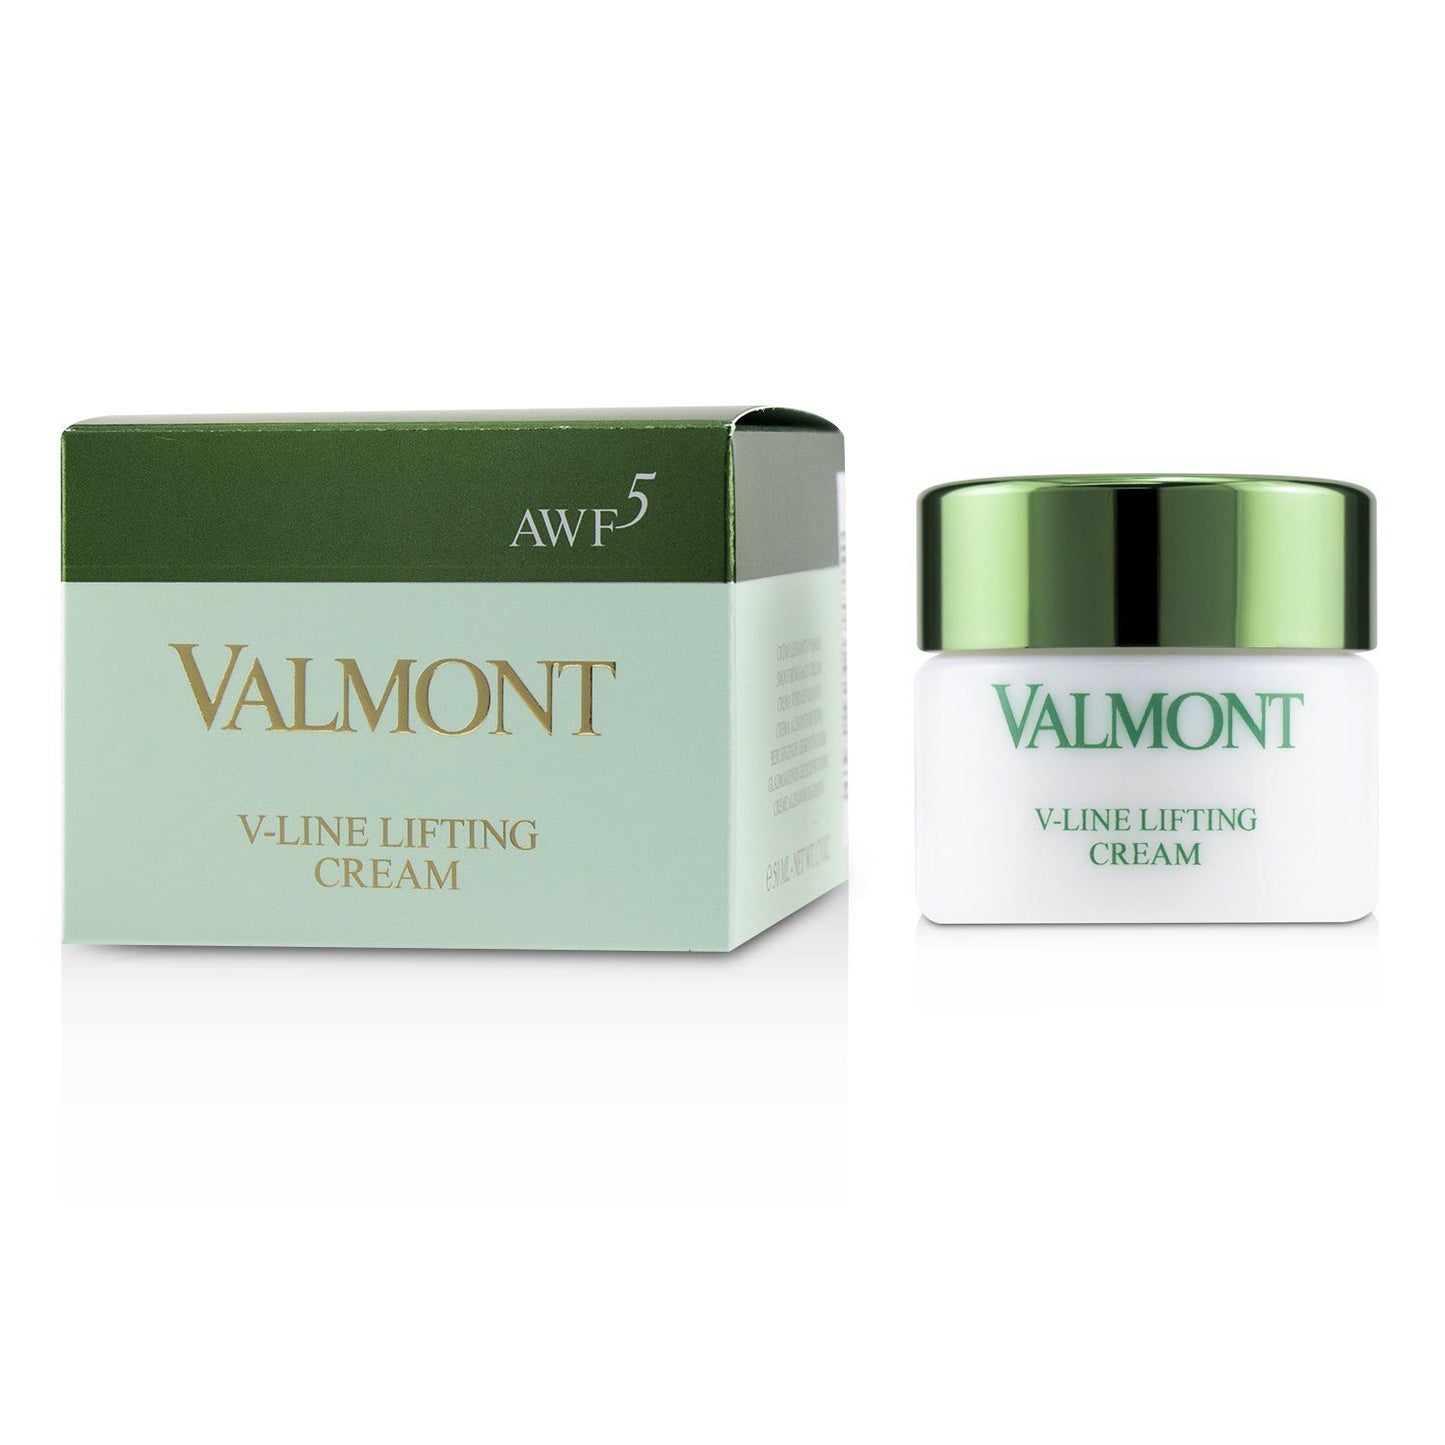 Valmont - AWF5 V-Line Lifting Cream (Smoothing Face Cream) - 50ml/1.7oz StrawberryNet